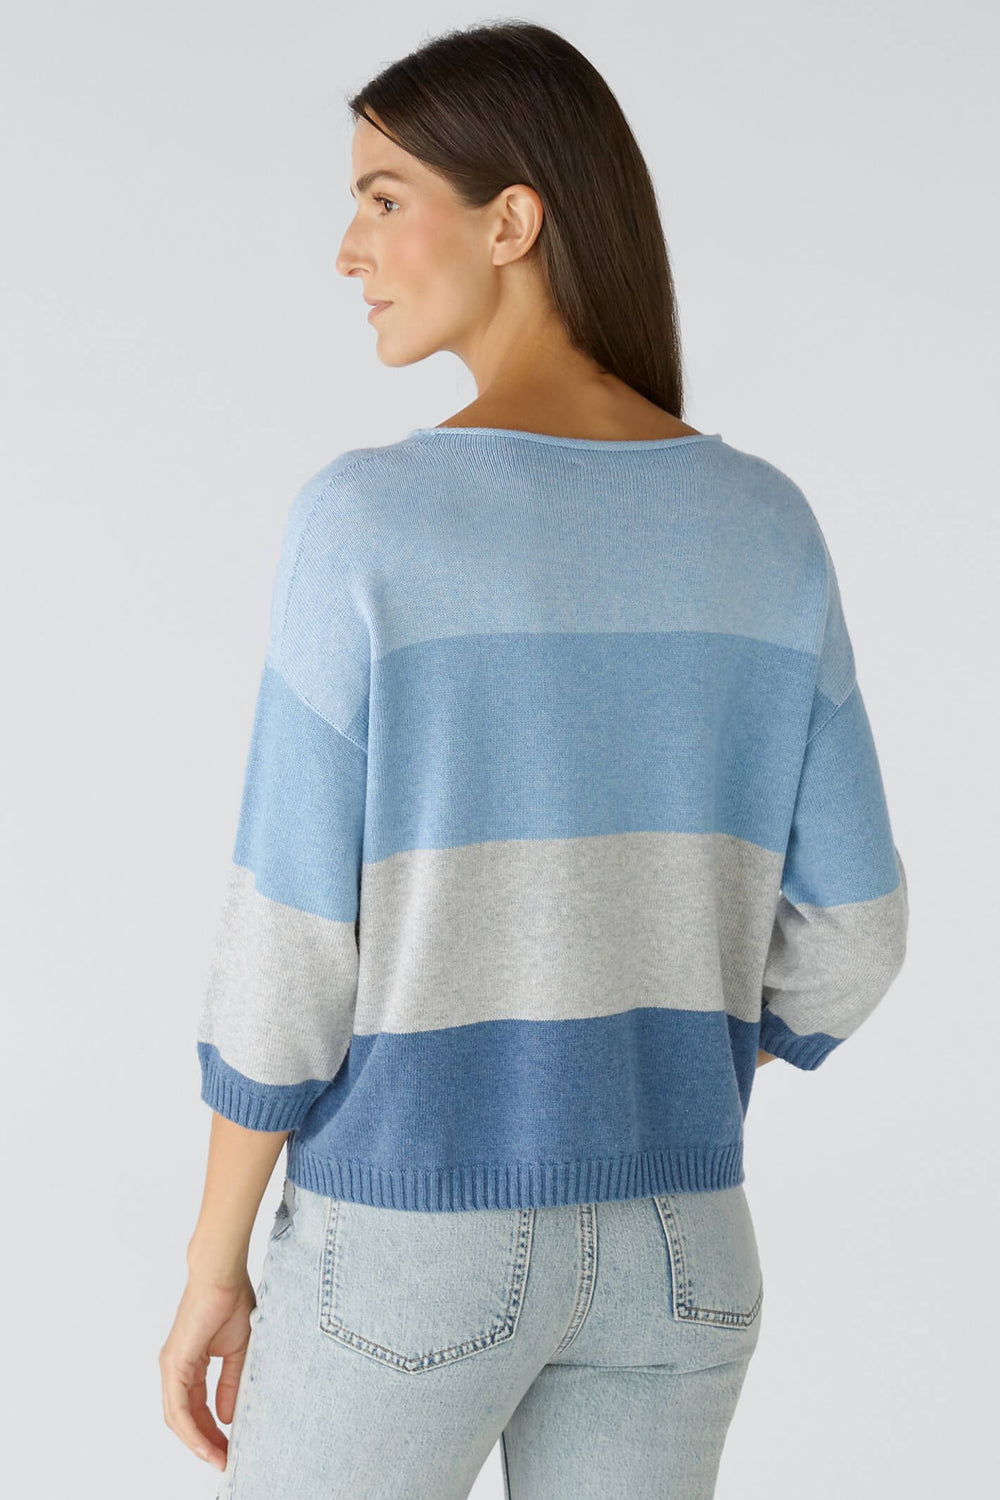 Oui 79351 Light Blue Grey Wide Neck Striped Jumper - Olivia Grace Fashion